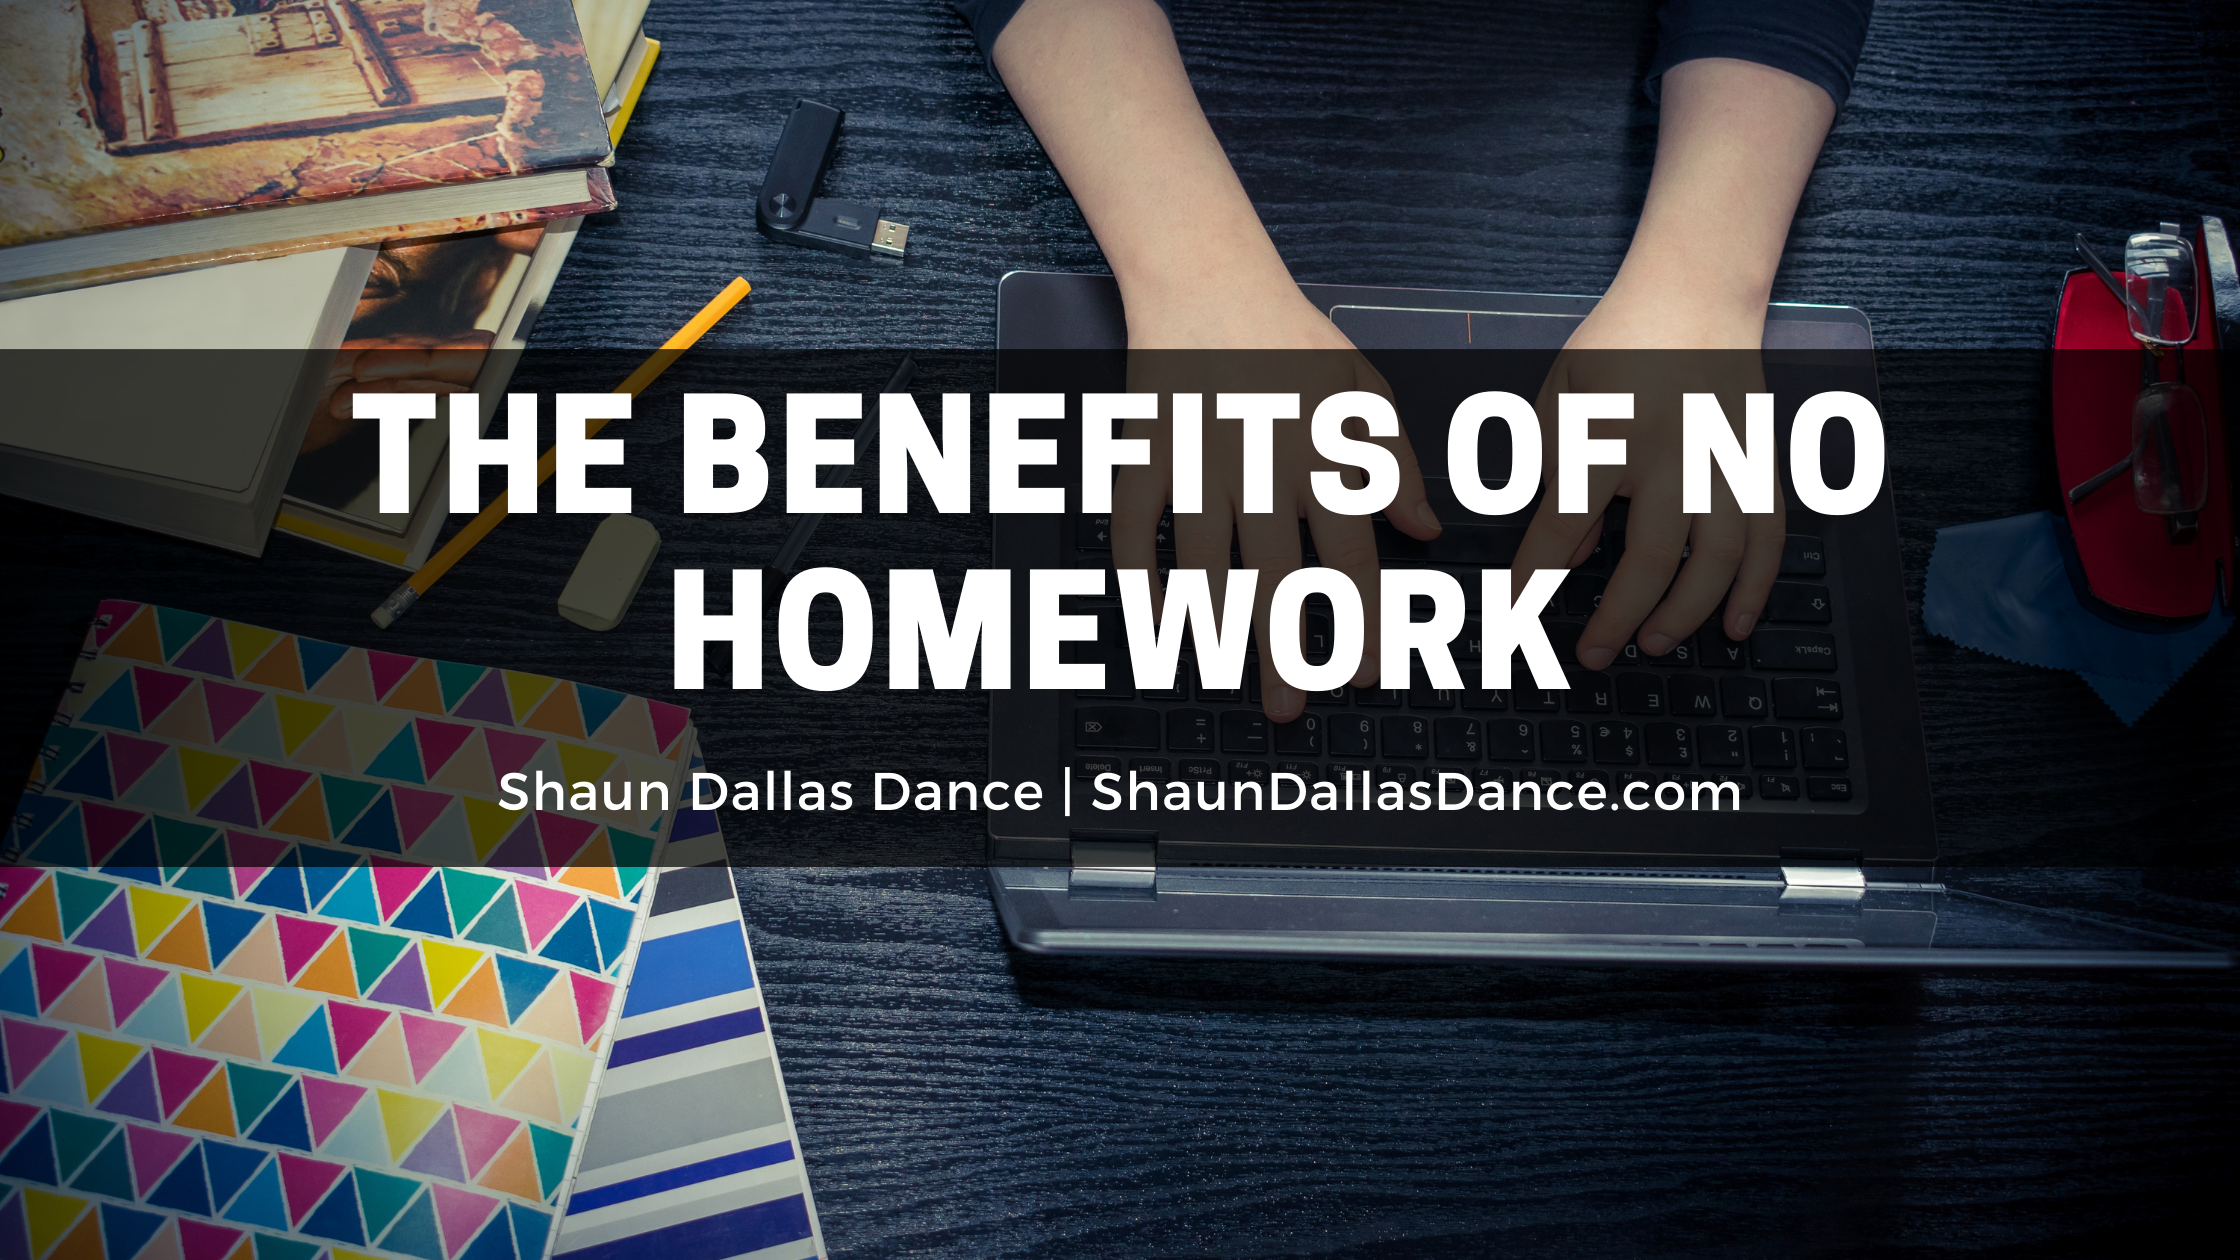 reasons we should ban homework